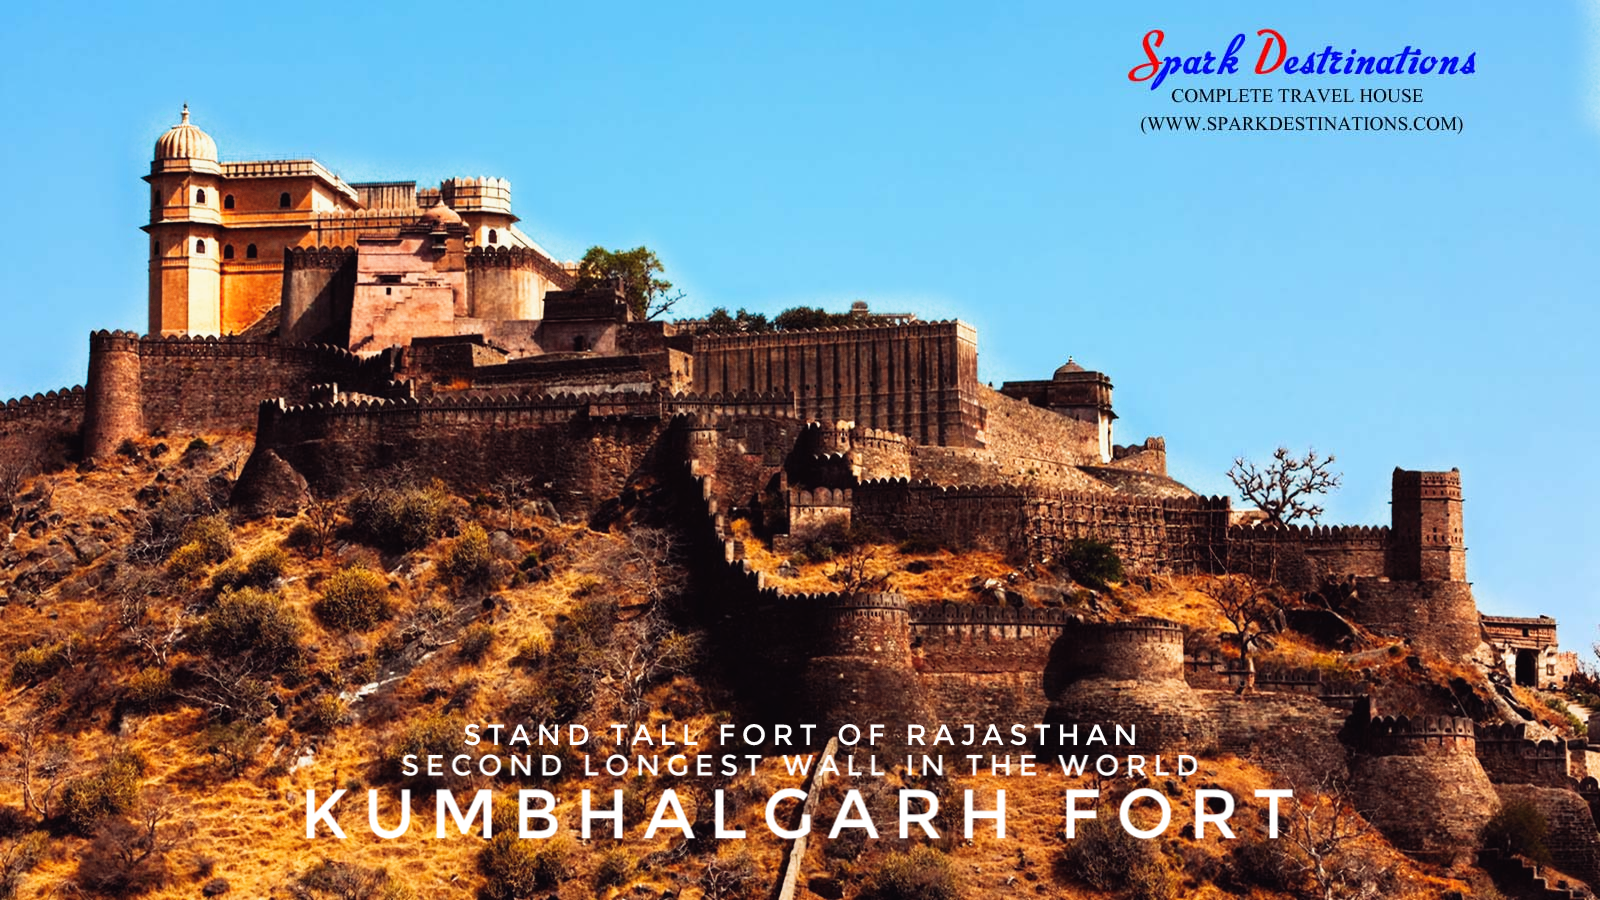 Kumbhalgarh fort Rajasthan Stand Tall Fort of Rajasthan Spark Destinations, kumbhalgarh fort, rajasthan tour packages, rajasthan vacation packages, vacation packages, affordable vacation packages, spark destinations rajasthan tour